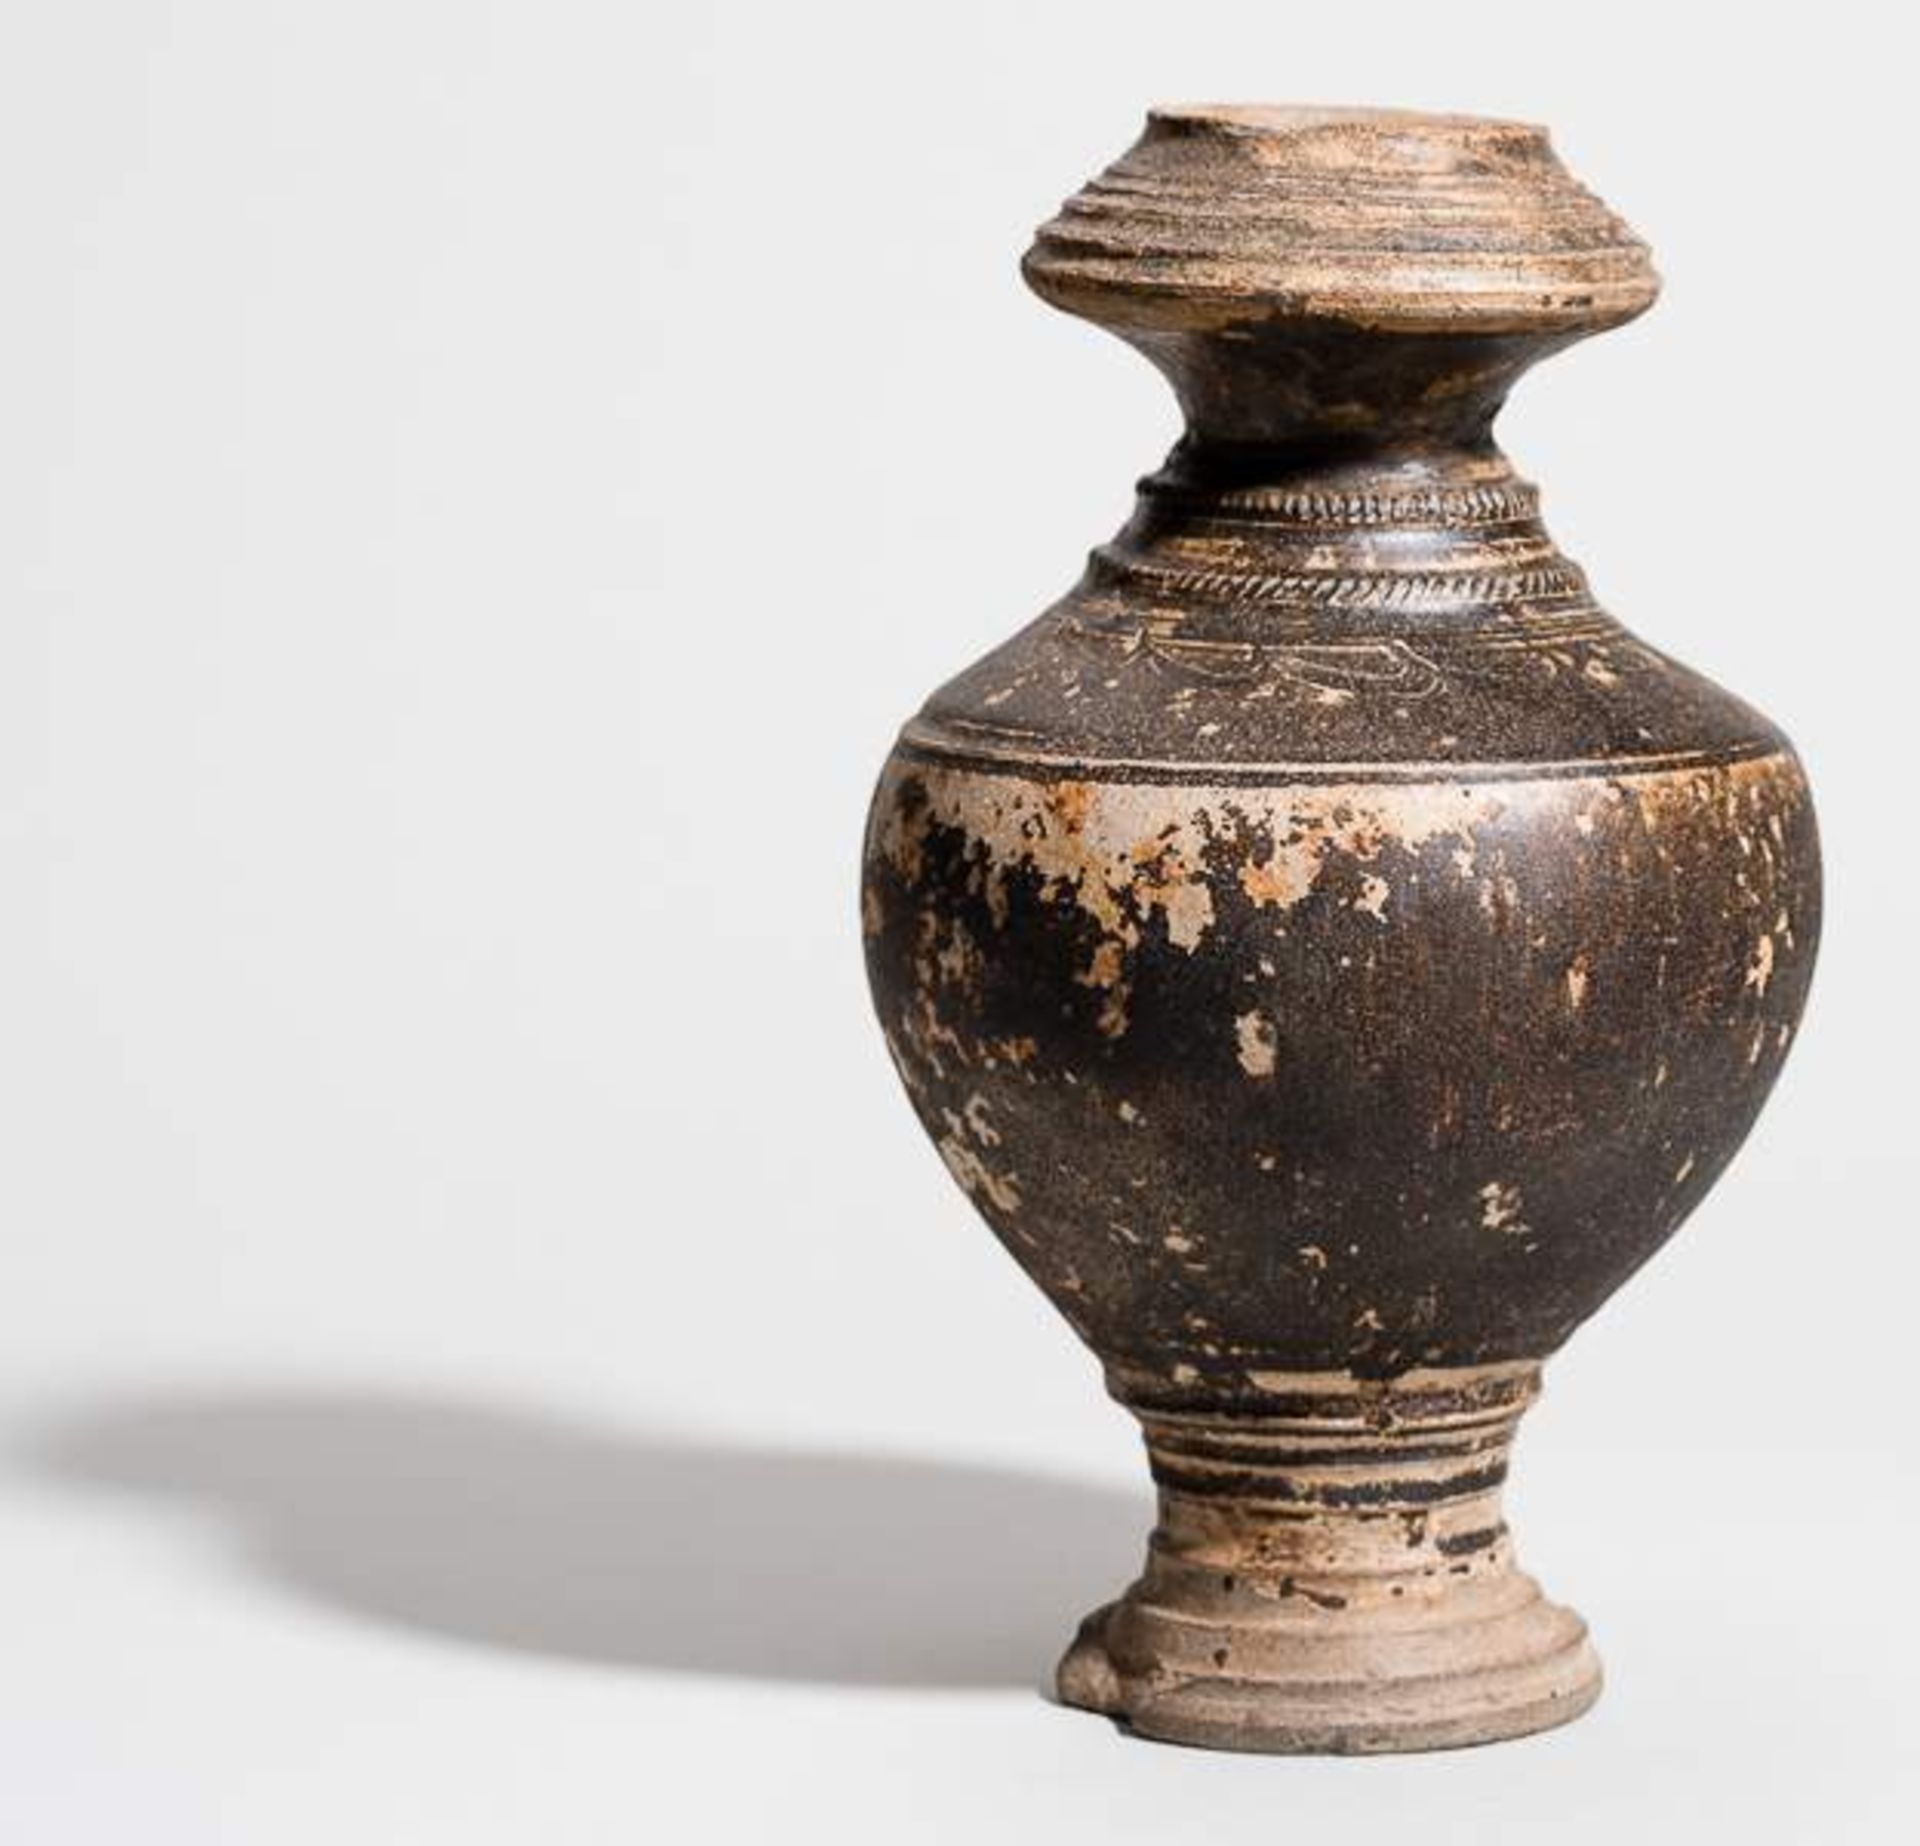 VASENFÖRMIGES GEFÄSS Keramik. Kambodscha, Altes Königreich Khmer, 11. bis 12. Jh. Seltener Typus, - Image 9 of 11